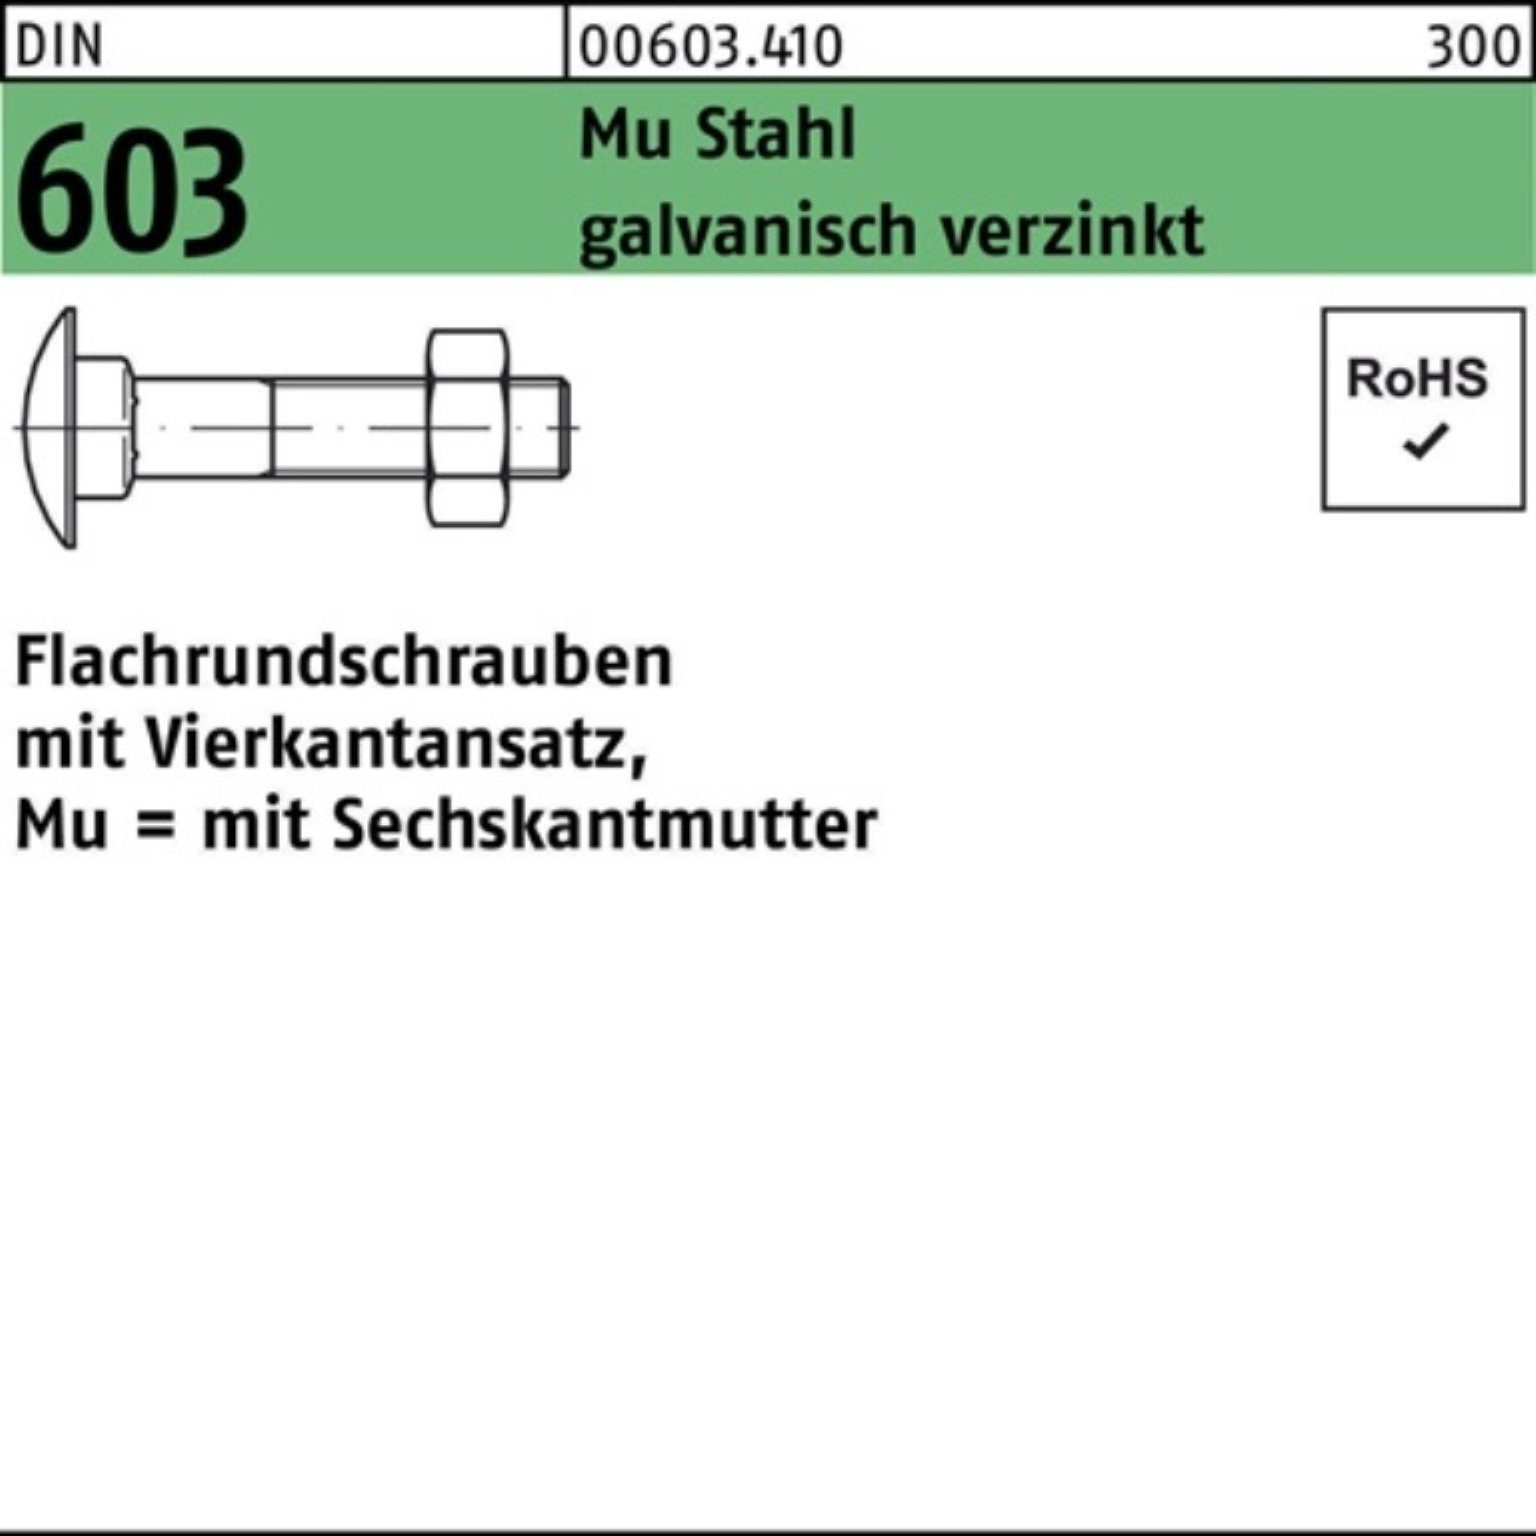 Reyher Schraube 100er Pack 603 DIN Vierkantansatz/6-ktmutter M8x200 Flachrundschraube